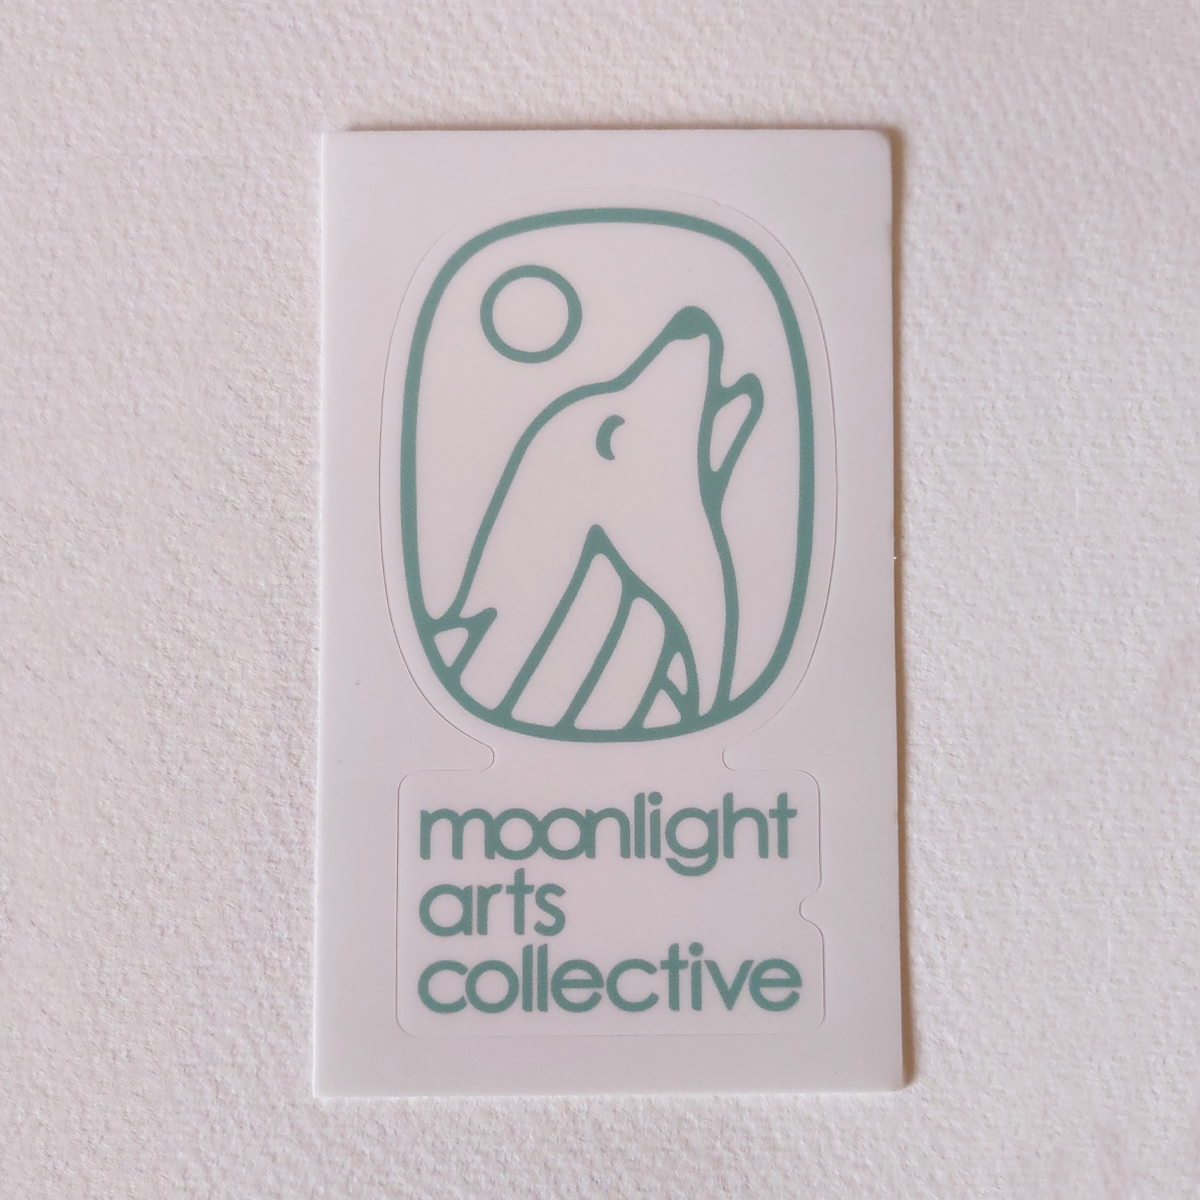 moonlight arts collective sticker - blue logo on white background